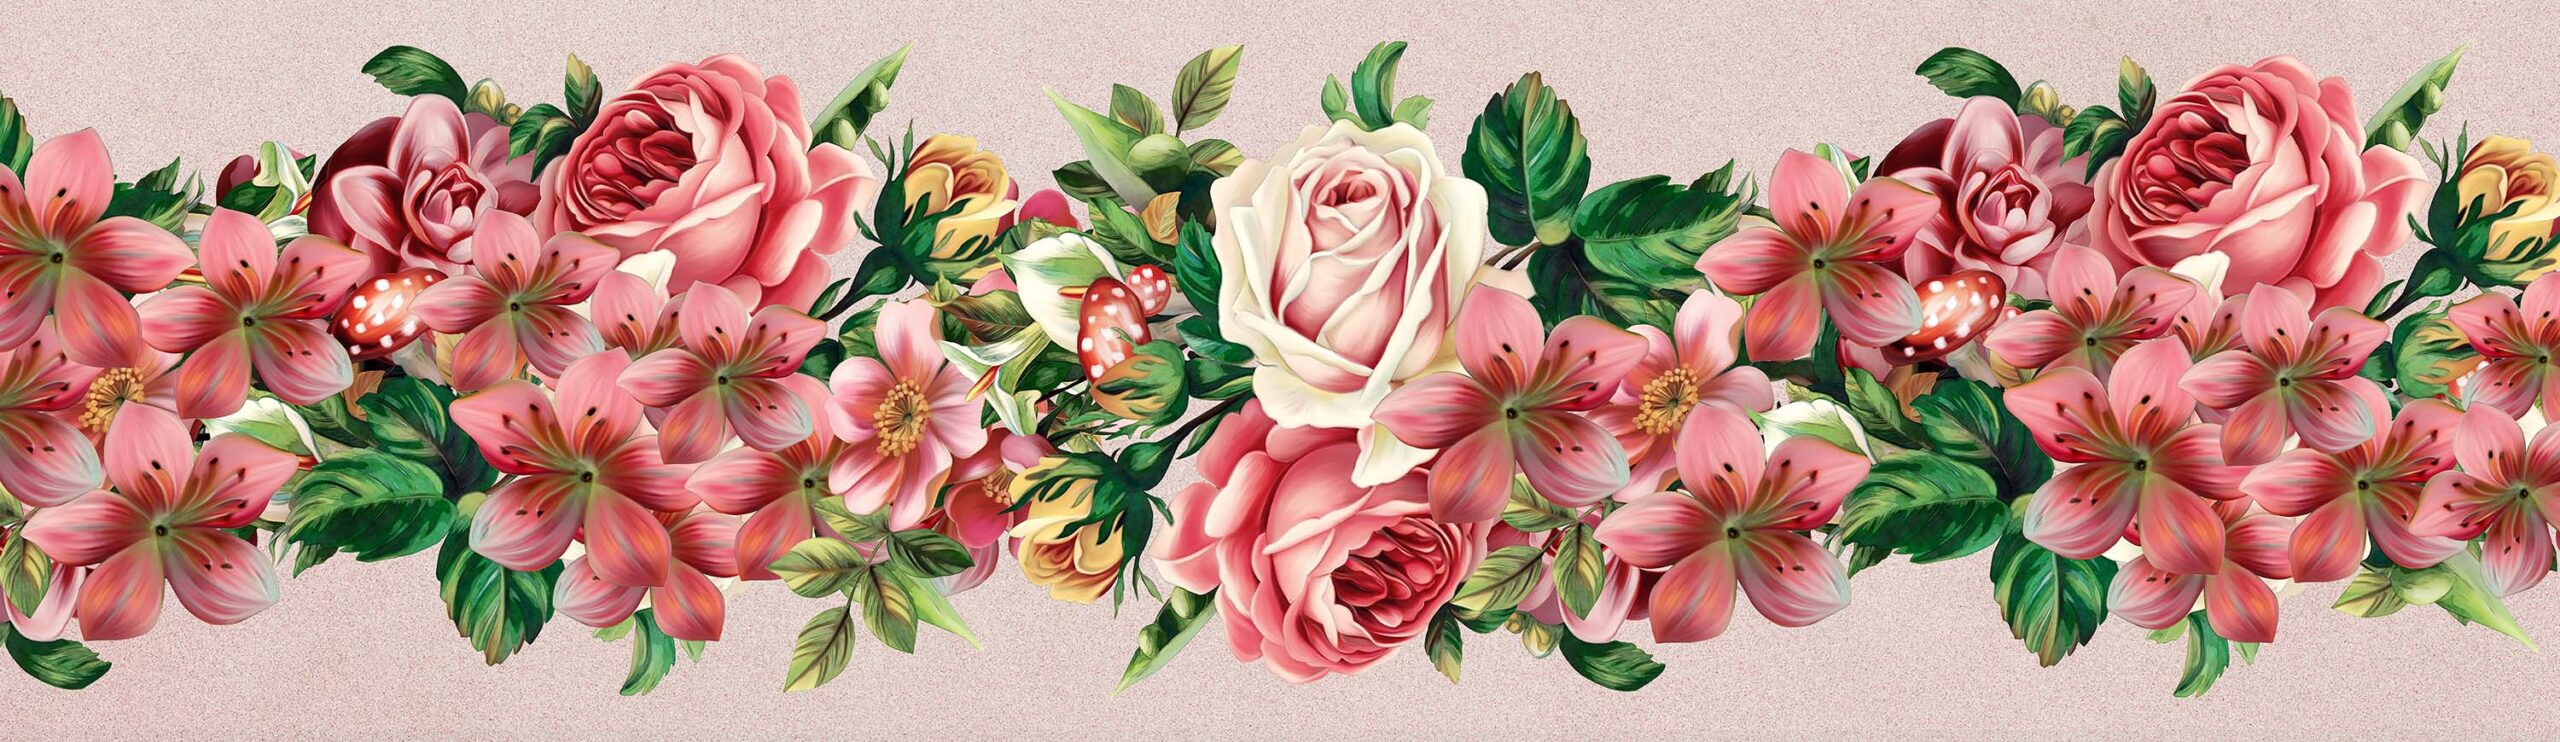 Buy Rose & Lilies Flower Wall Border Sticker | WallDesign.in